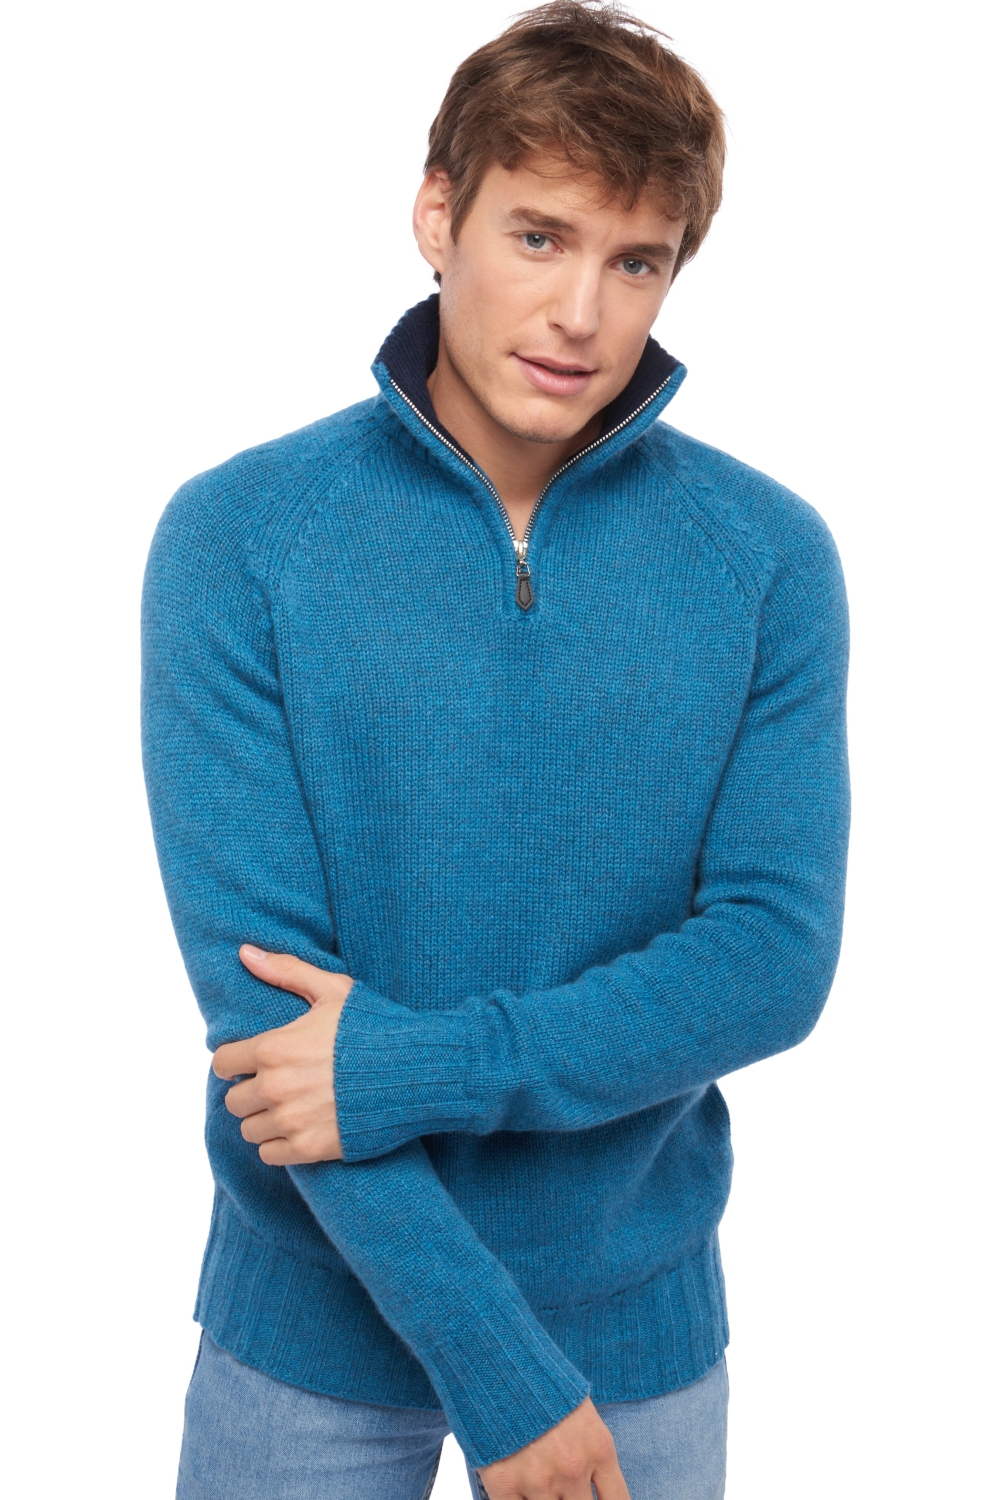 Cashmere men chunky sweater olivier manor blue dress blue 3xl